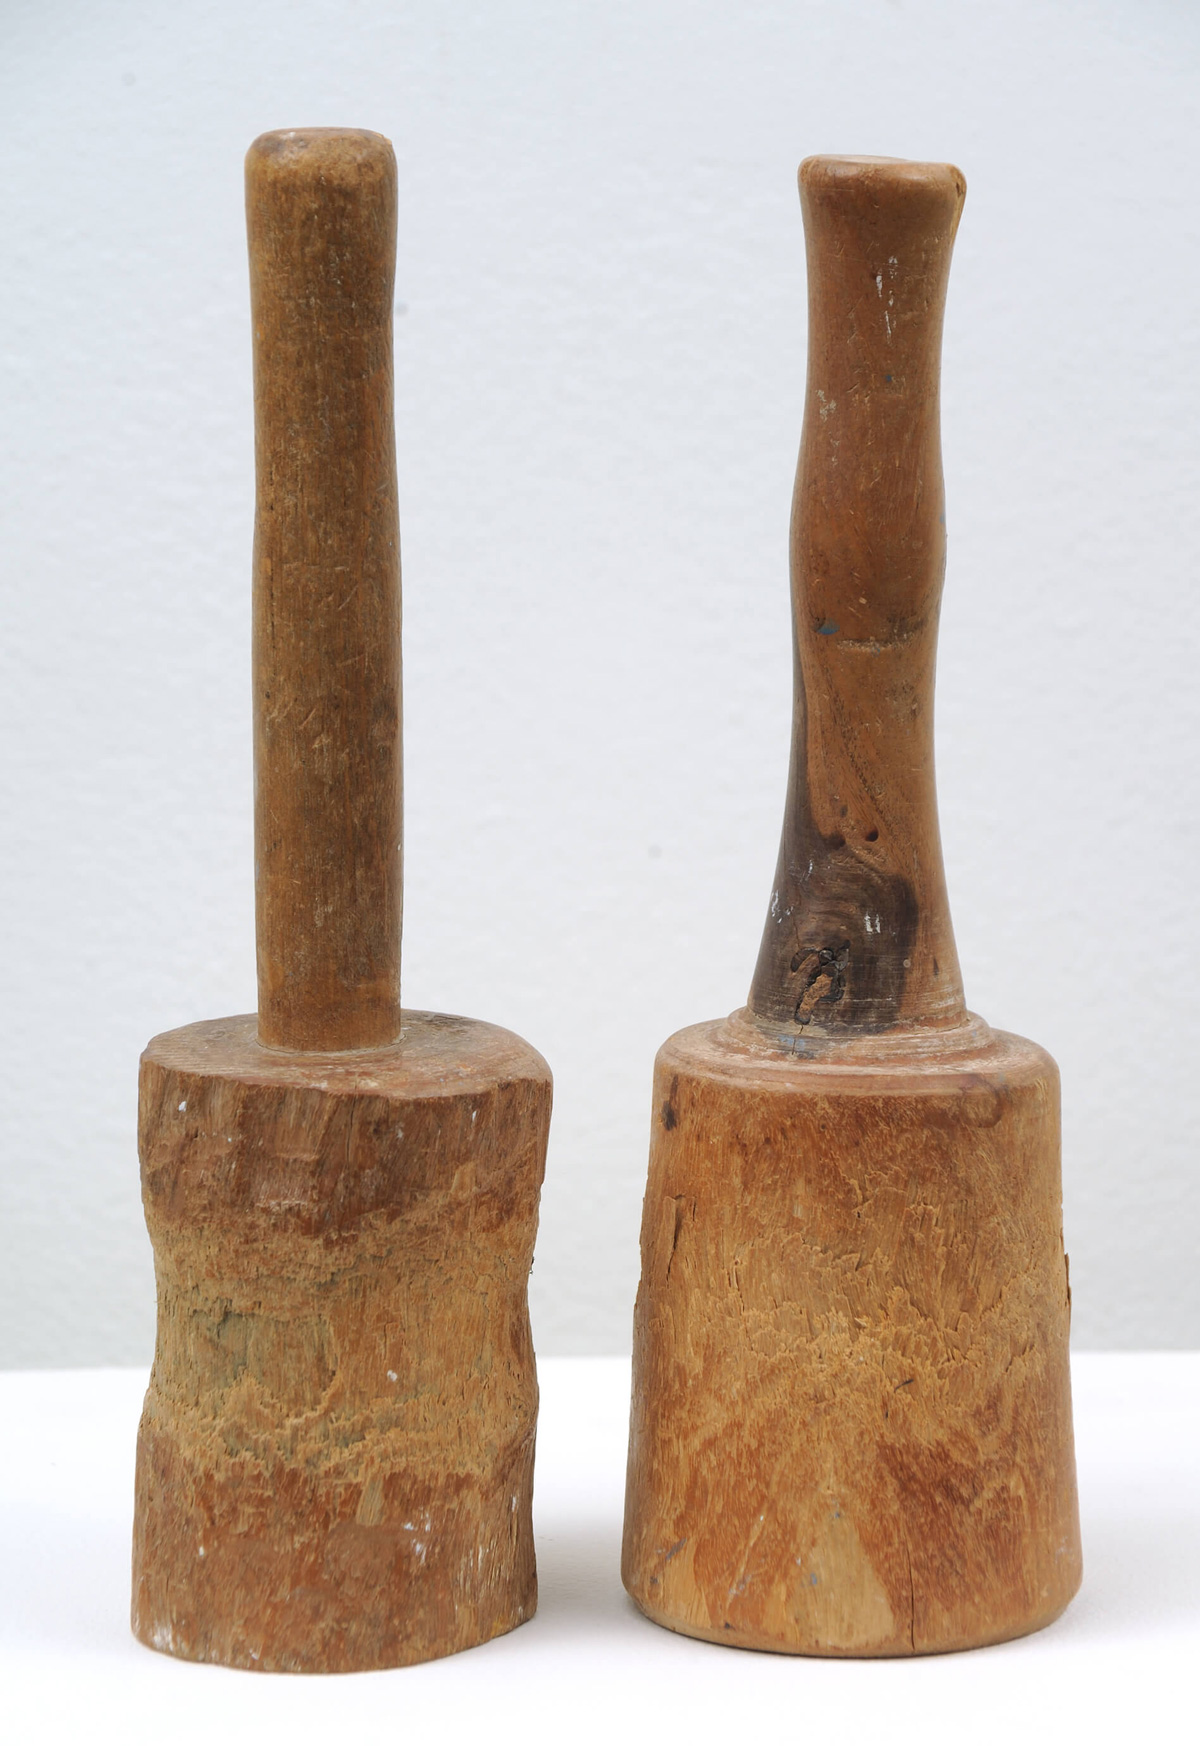 Lothar Brabanski's mallets used for sculpting forms in wood